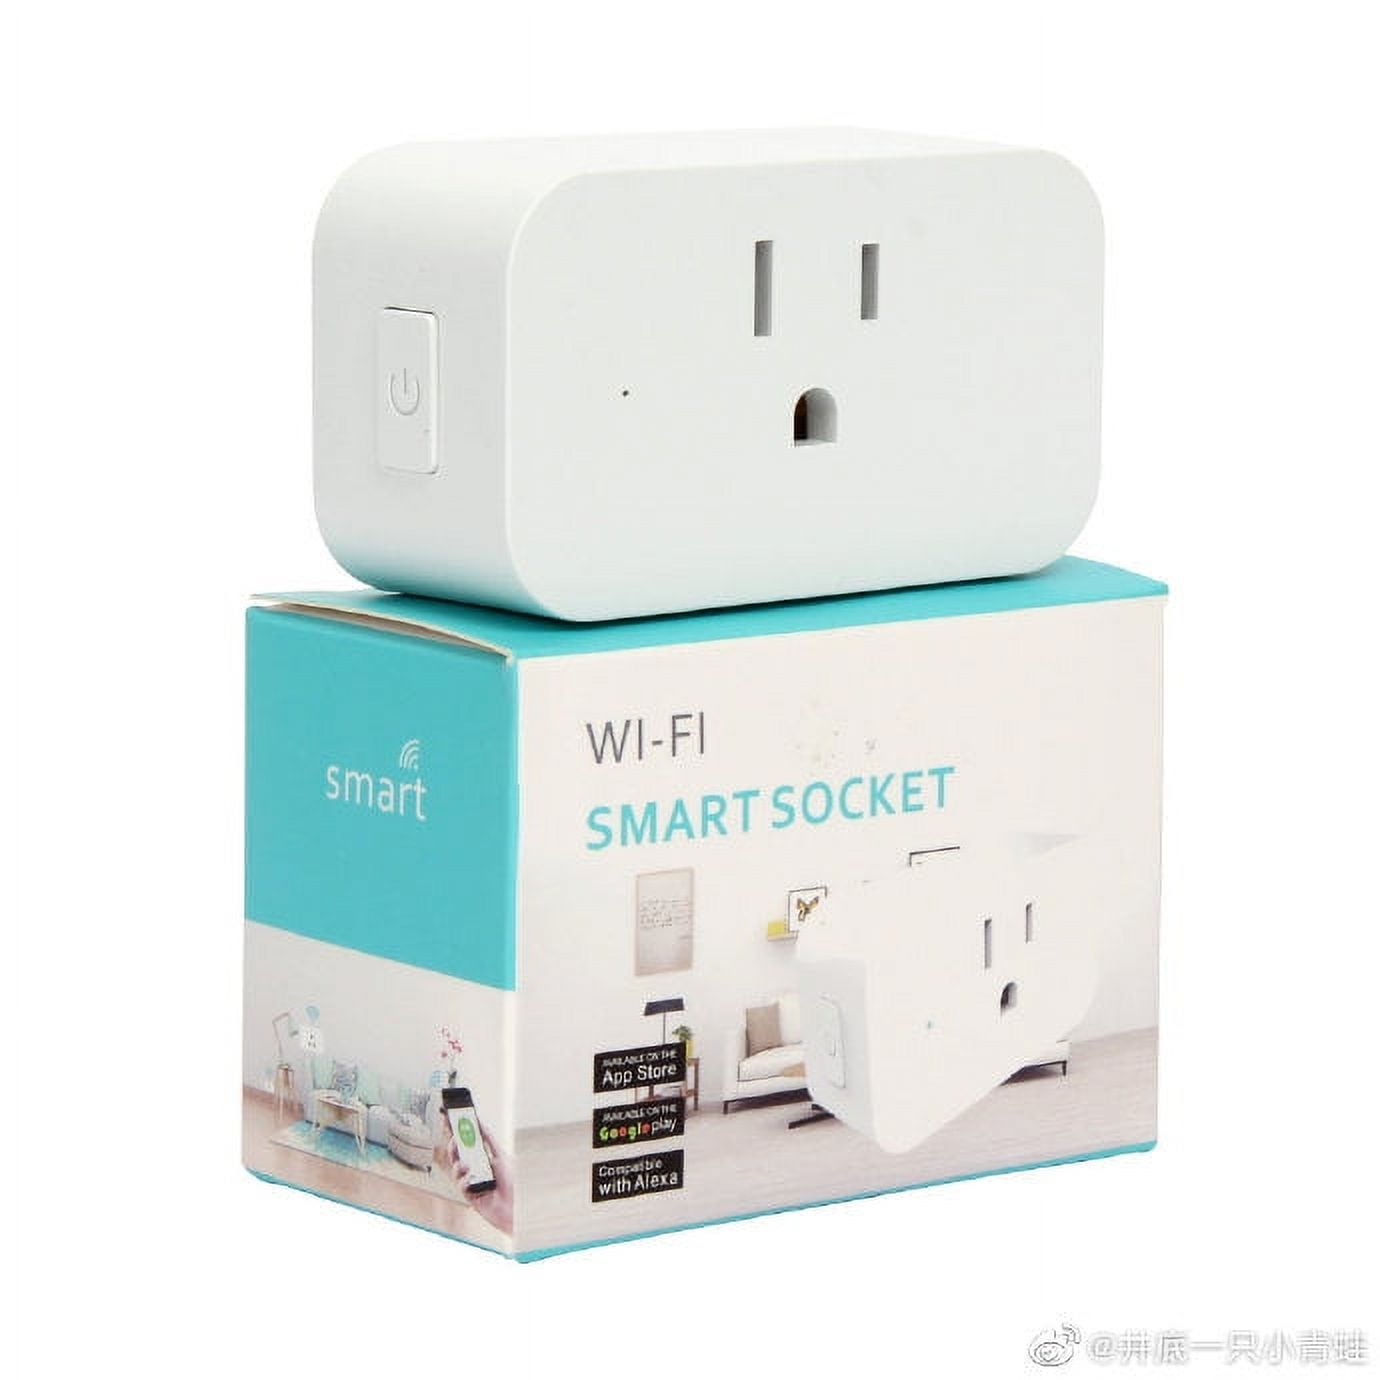 3x WYZE Wi-Fi Smart Plug (1-Pack) - WLPP1CFH-1 Alexa,HeyGoogle,IFTTT